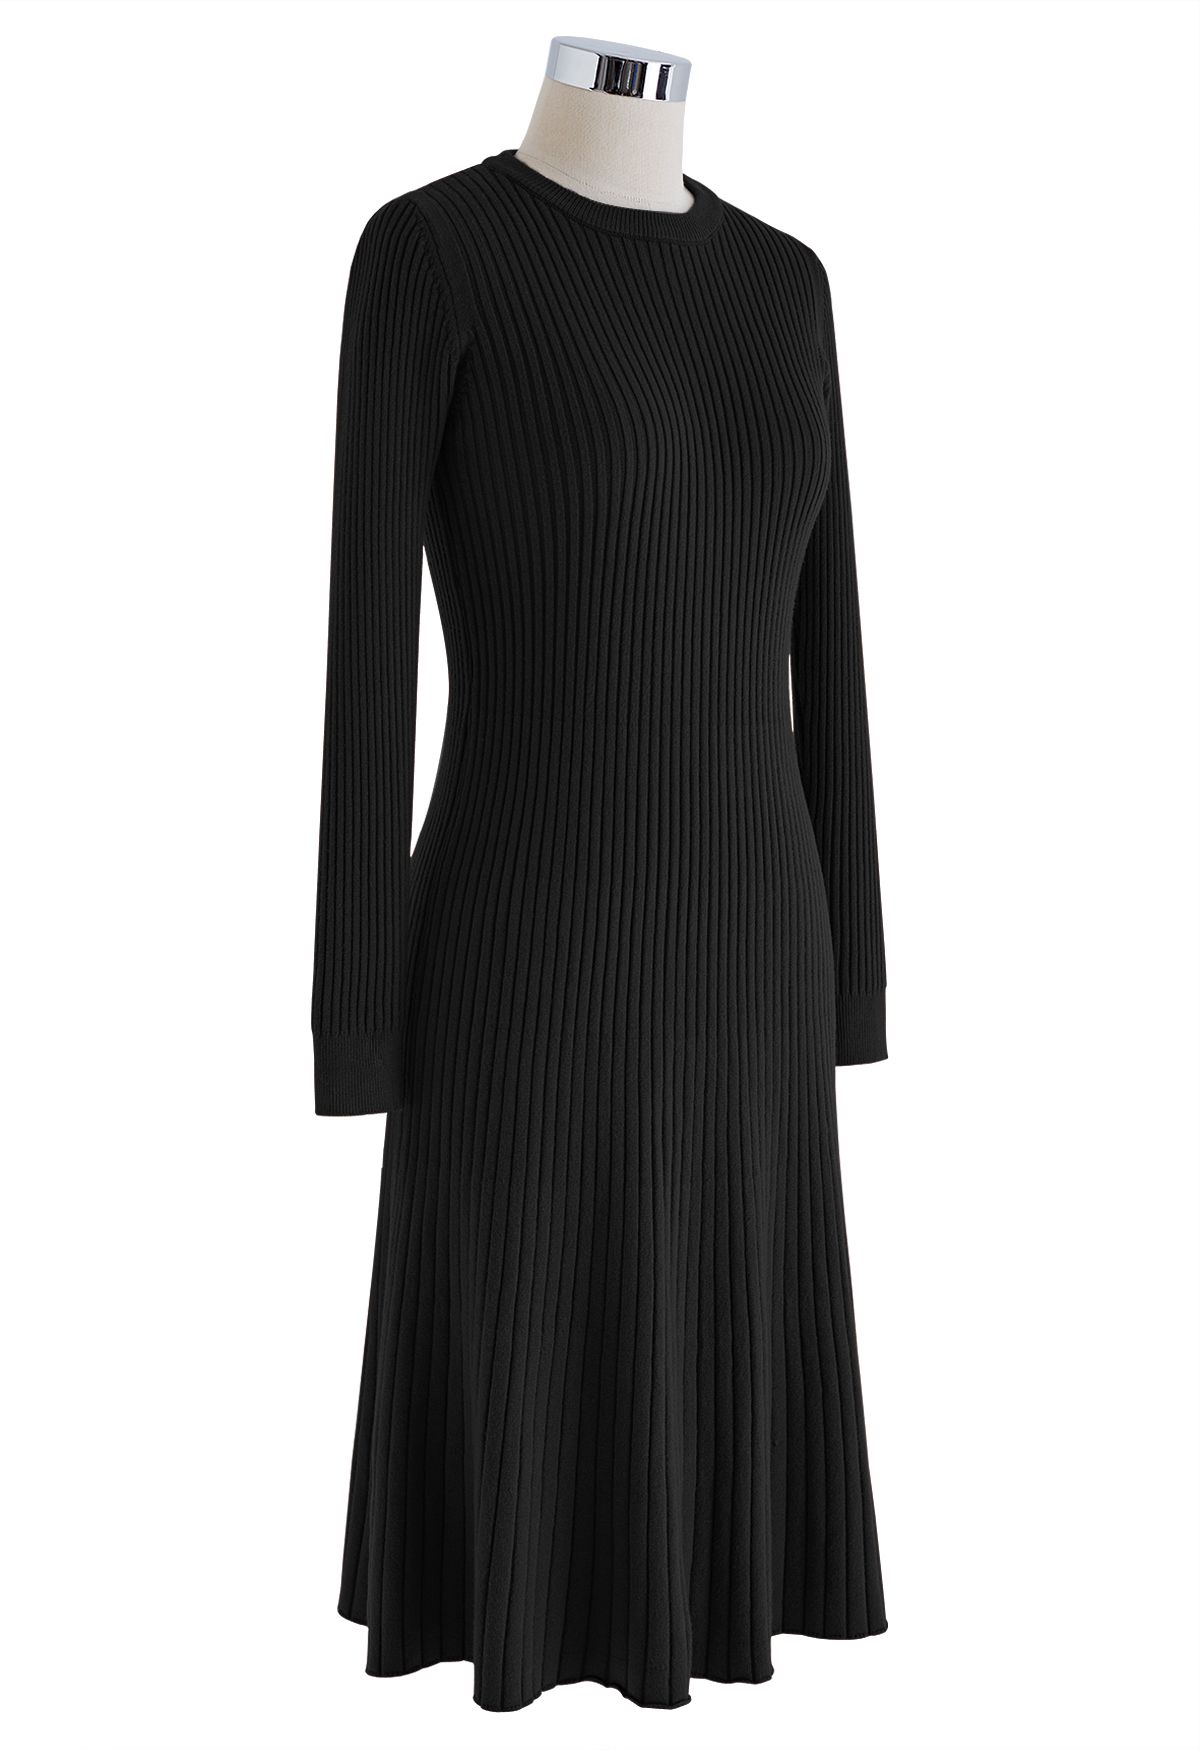 Ribbed Texture Frilling Midi Dress in Black